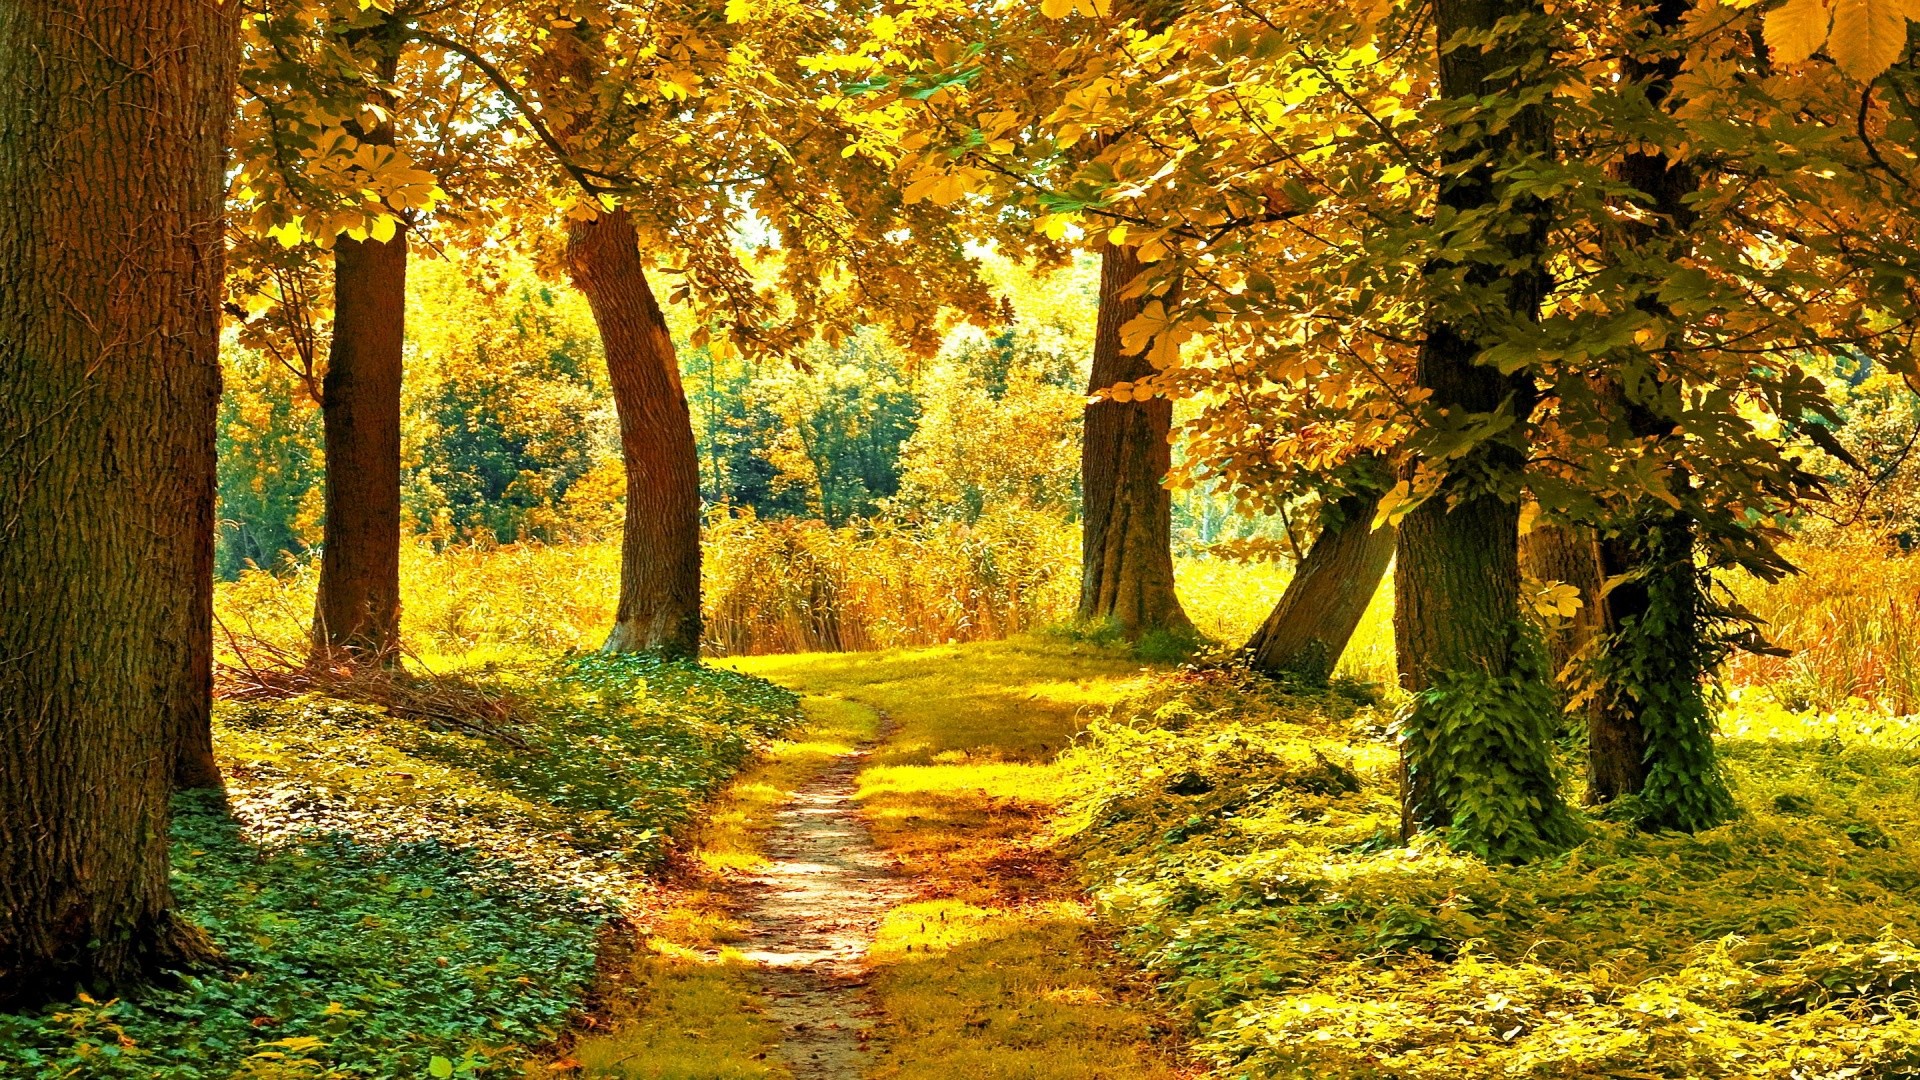 1920x1080 21+ Best HD Autumn Landscape Wallpapers | feelgrPH Â· Landscape  WallpaperWallpaper Desktop